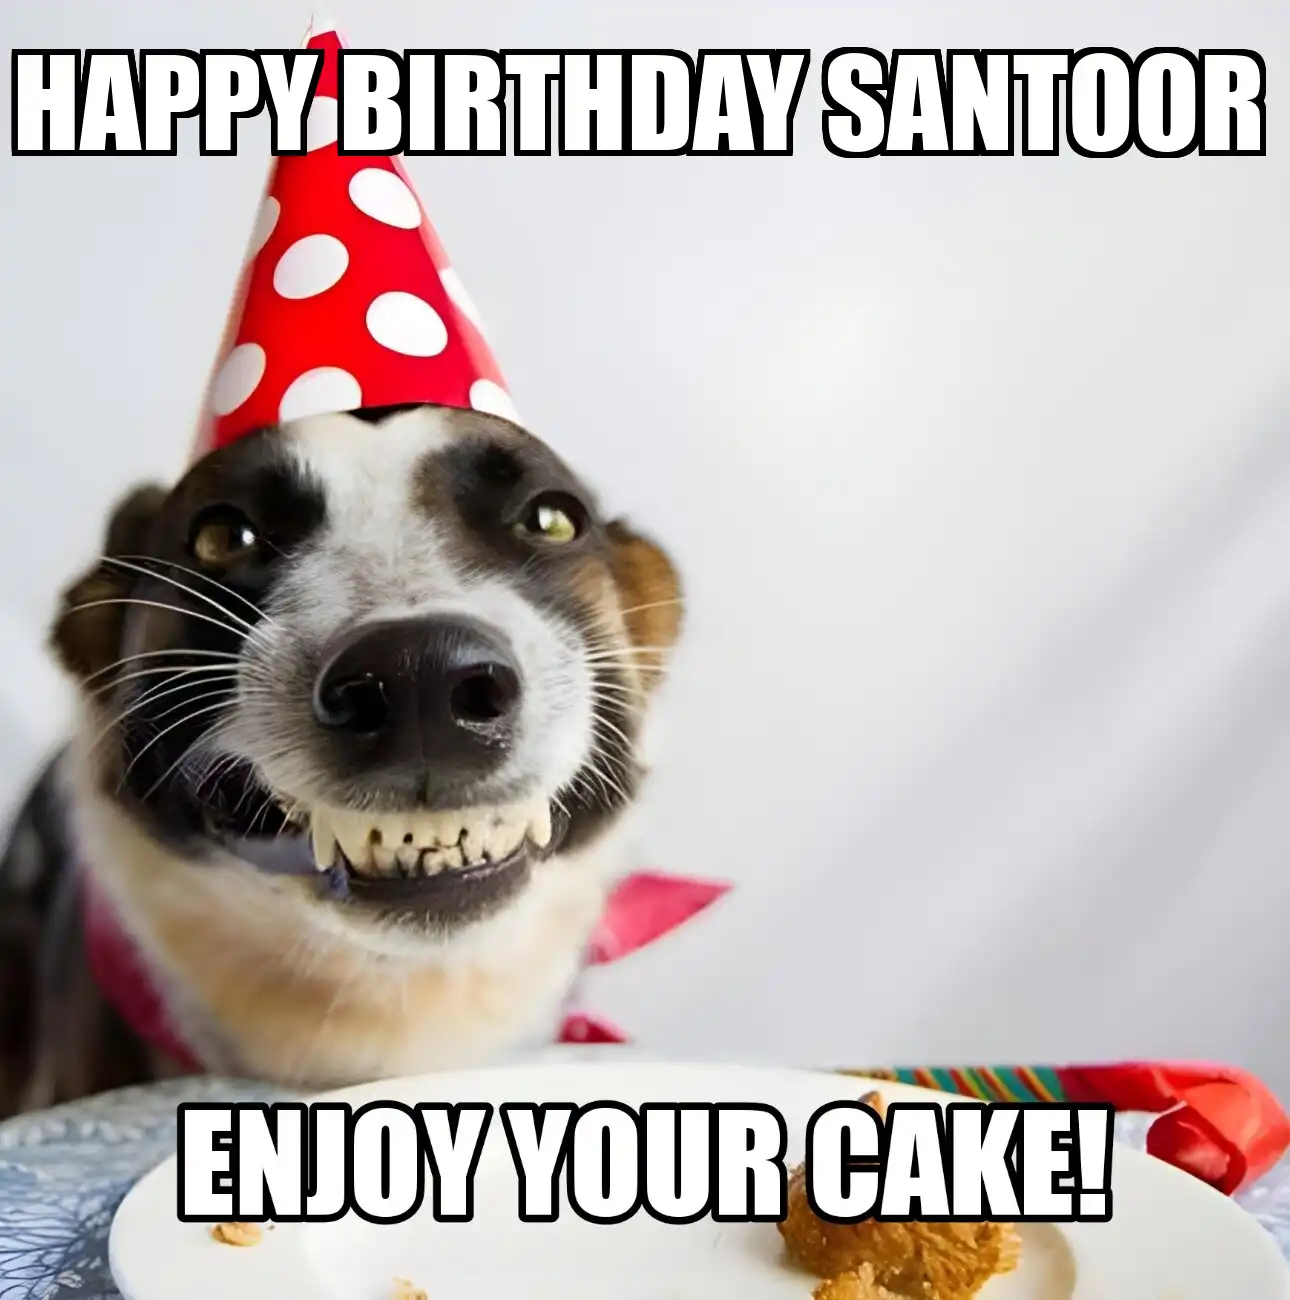 Happy Birthday Santoor Enjoy Your Cake Dog Meme